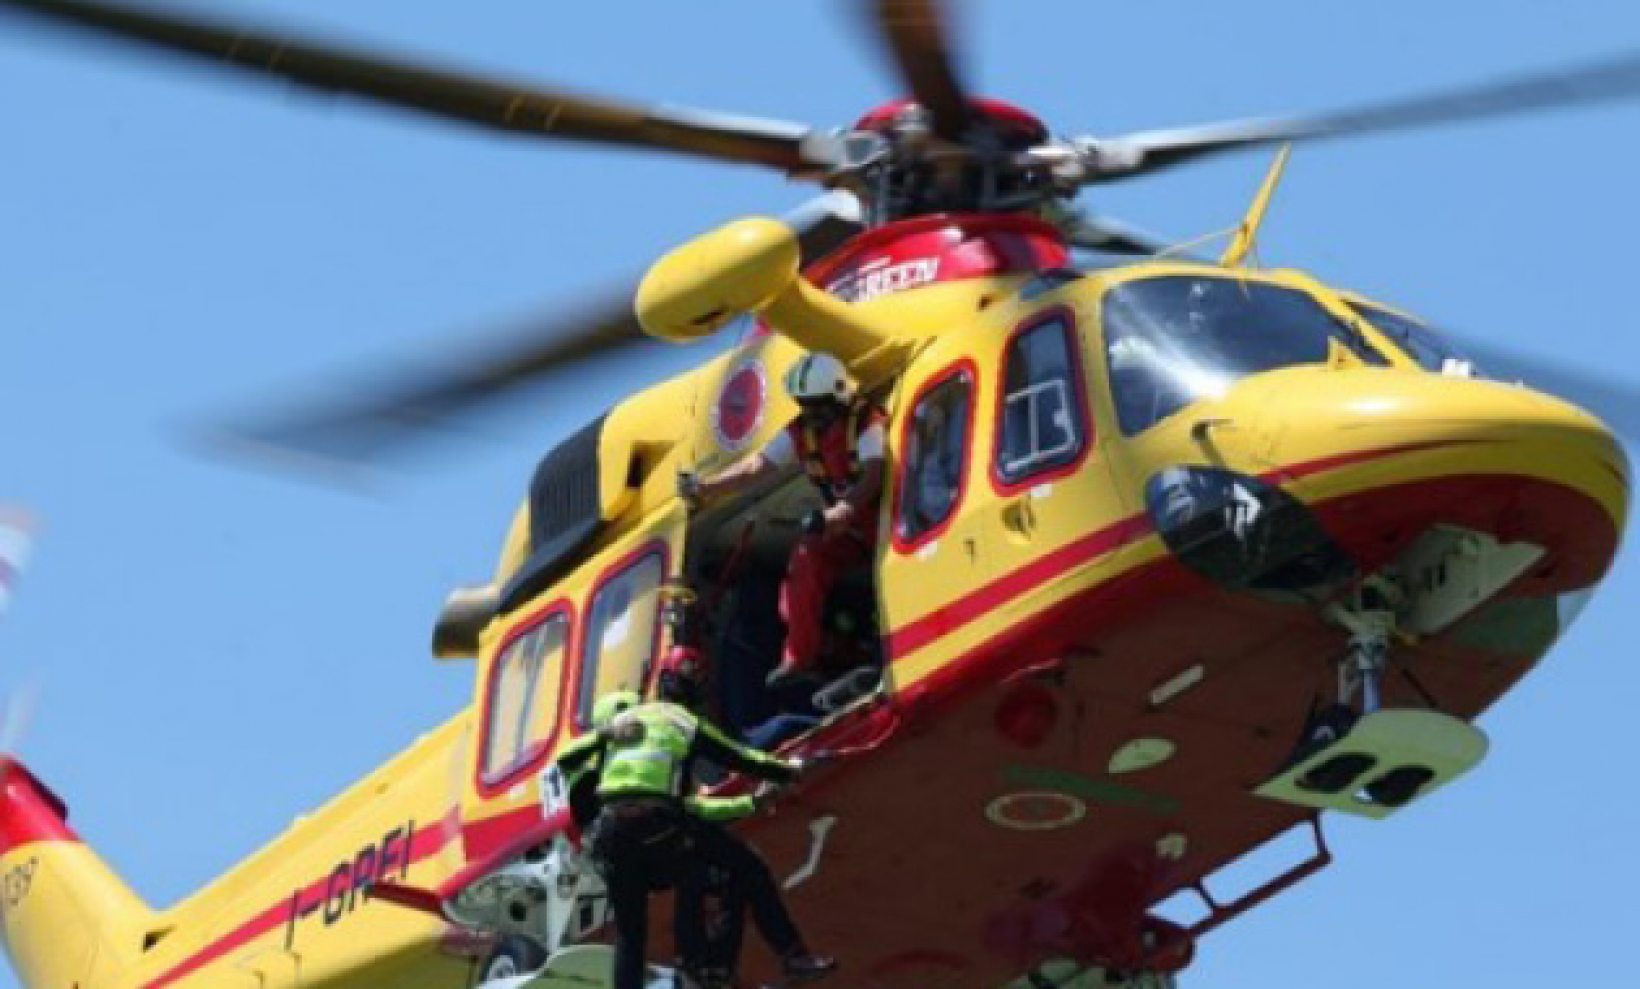 Air Ambulances In Natural Disaster Response: Case Studies